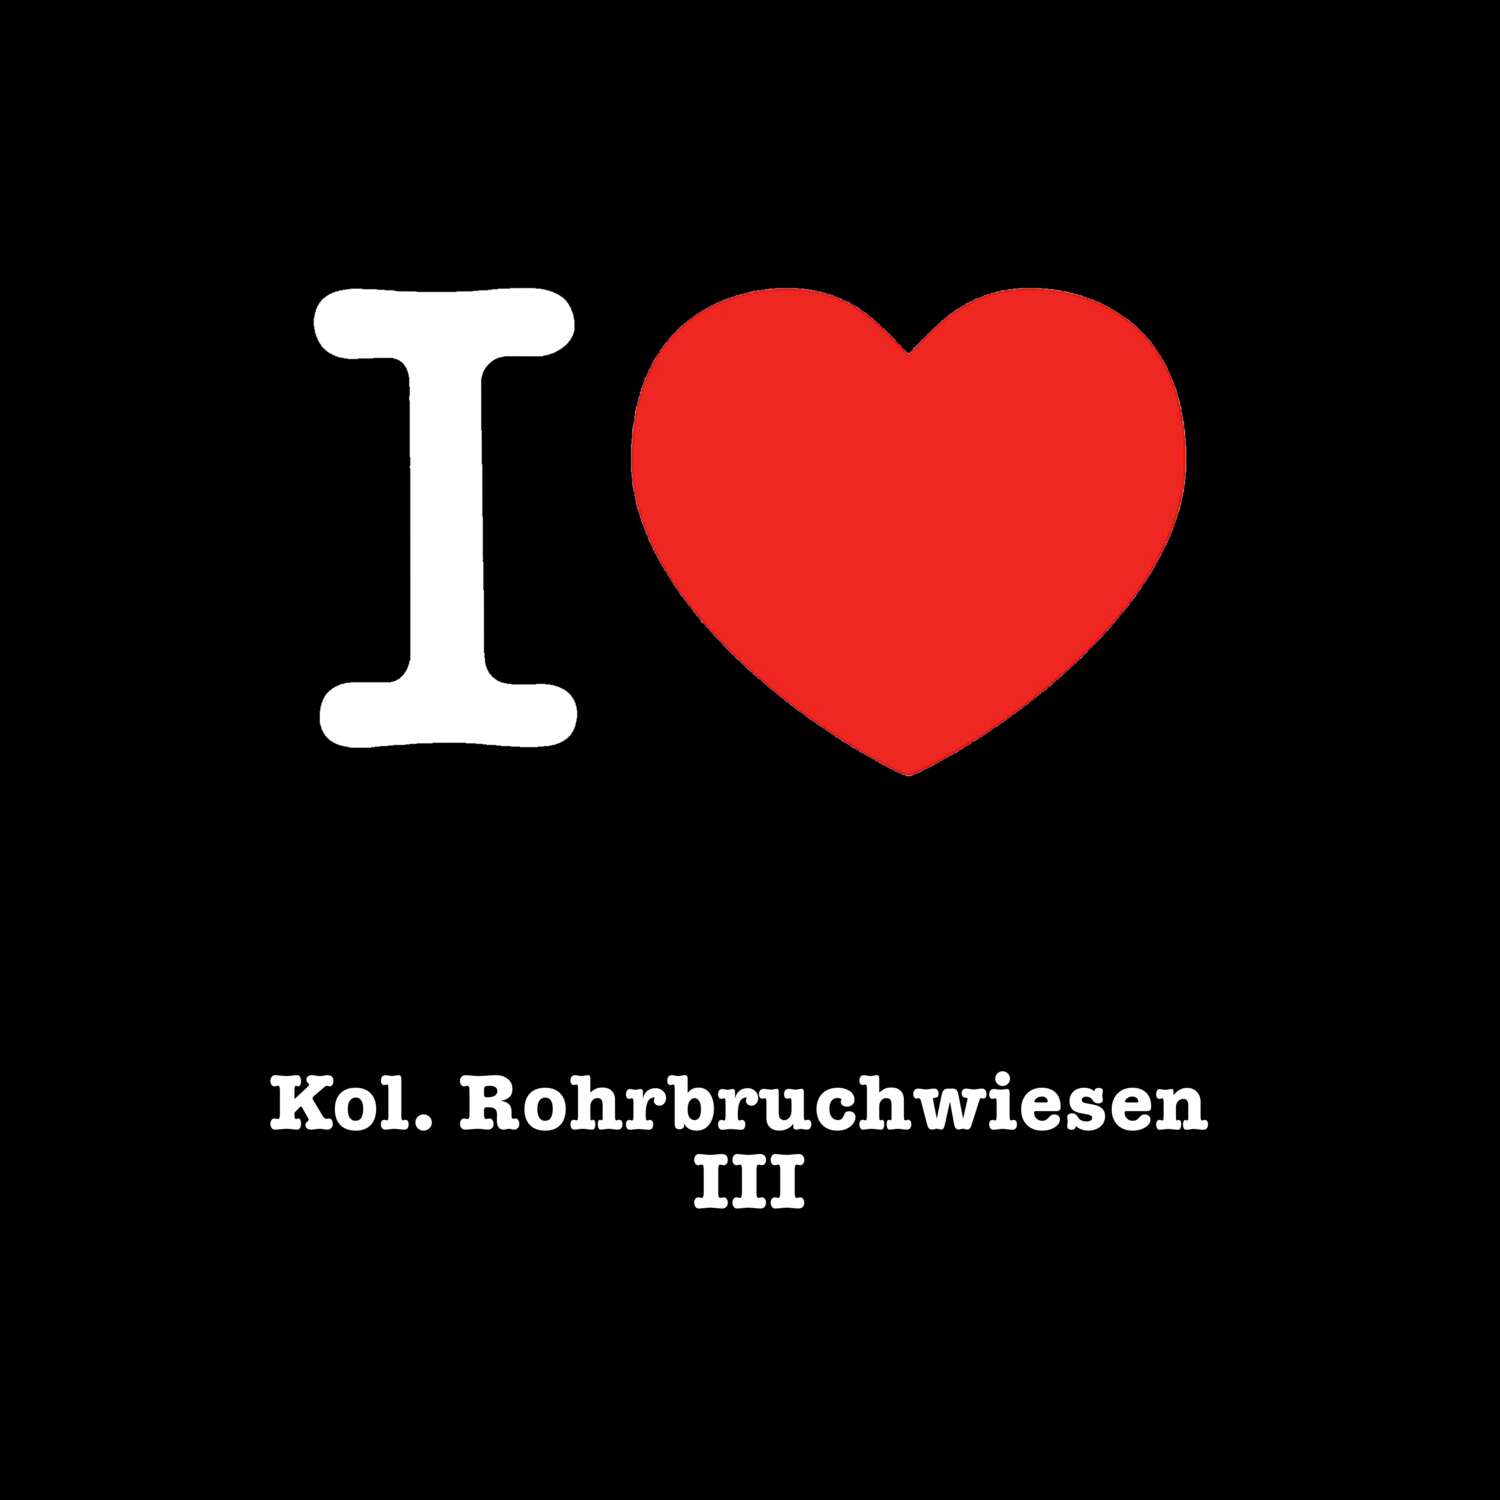 Kol. Rohrbruchwiesen III T-Shirt »I love«